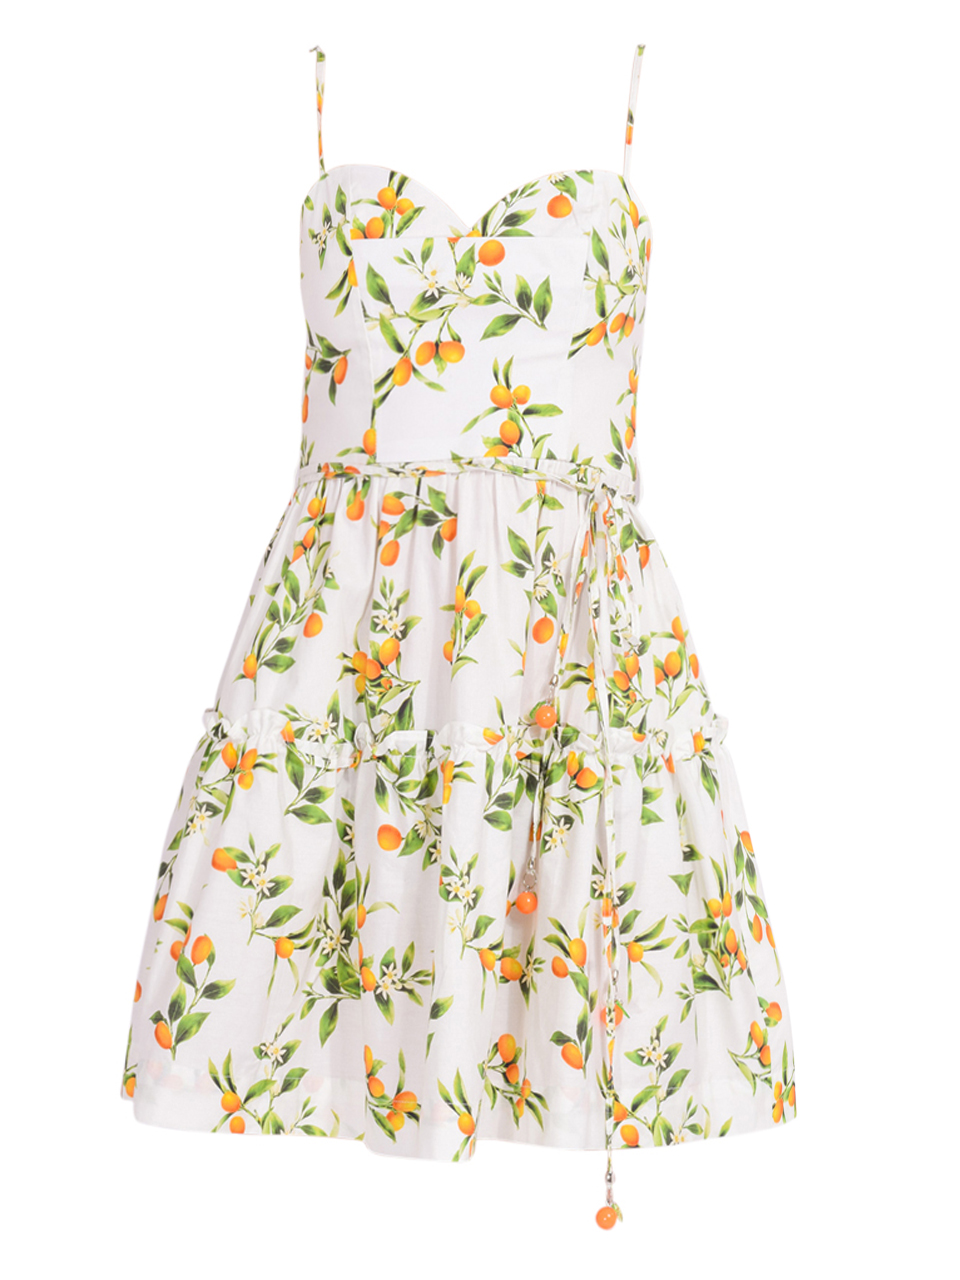 LALIBELA Chiara Short Dress in White/Orange Product Shot 